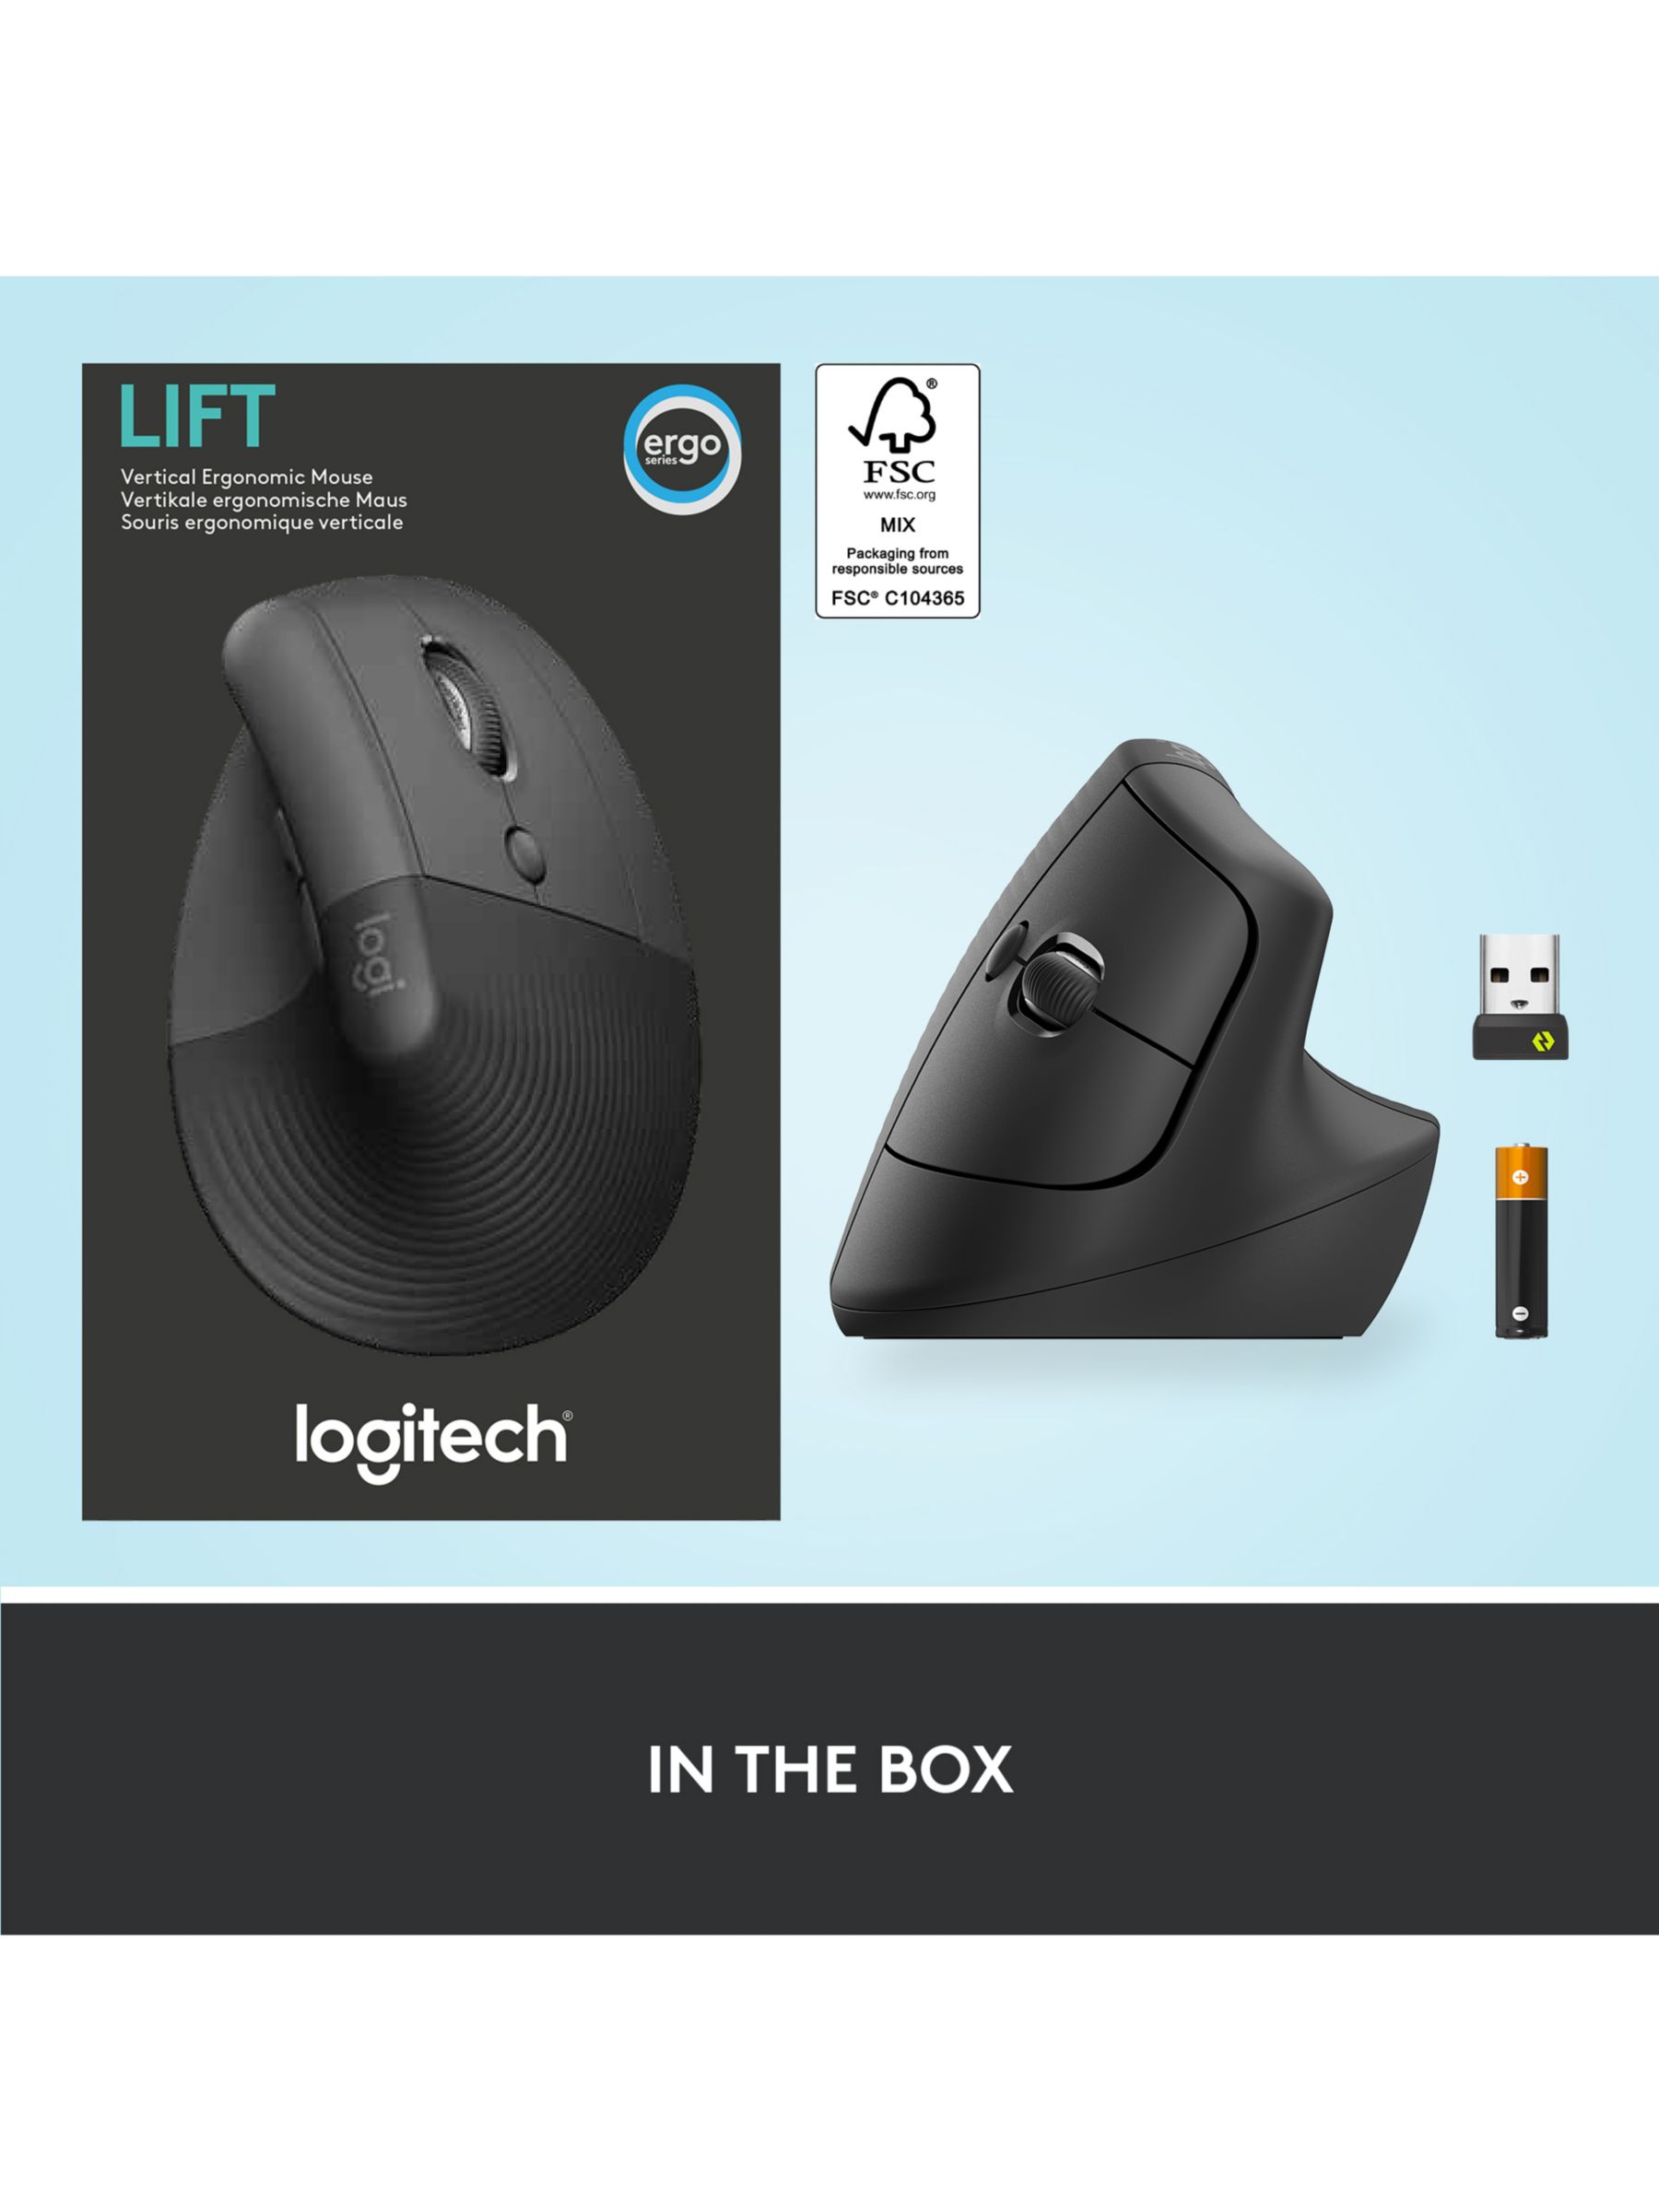 Logitech Lift Vertical Ergonomic Mouse, Wireless, Bluetooth or